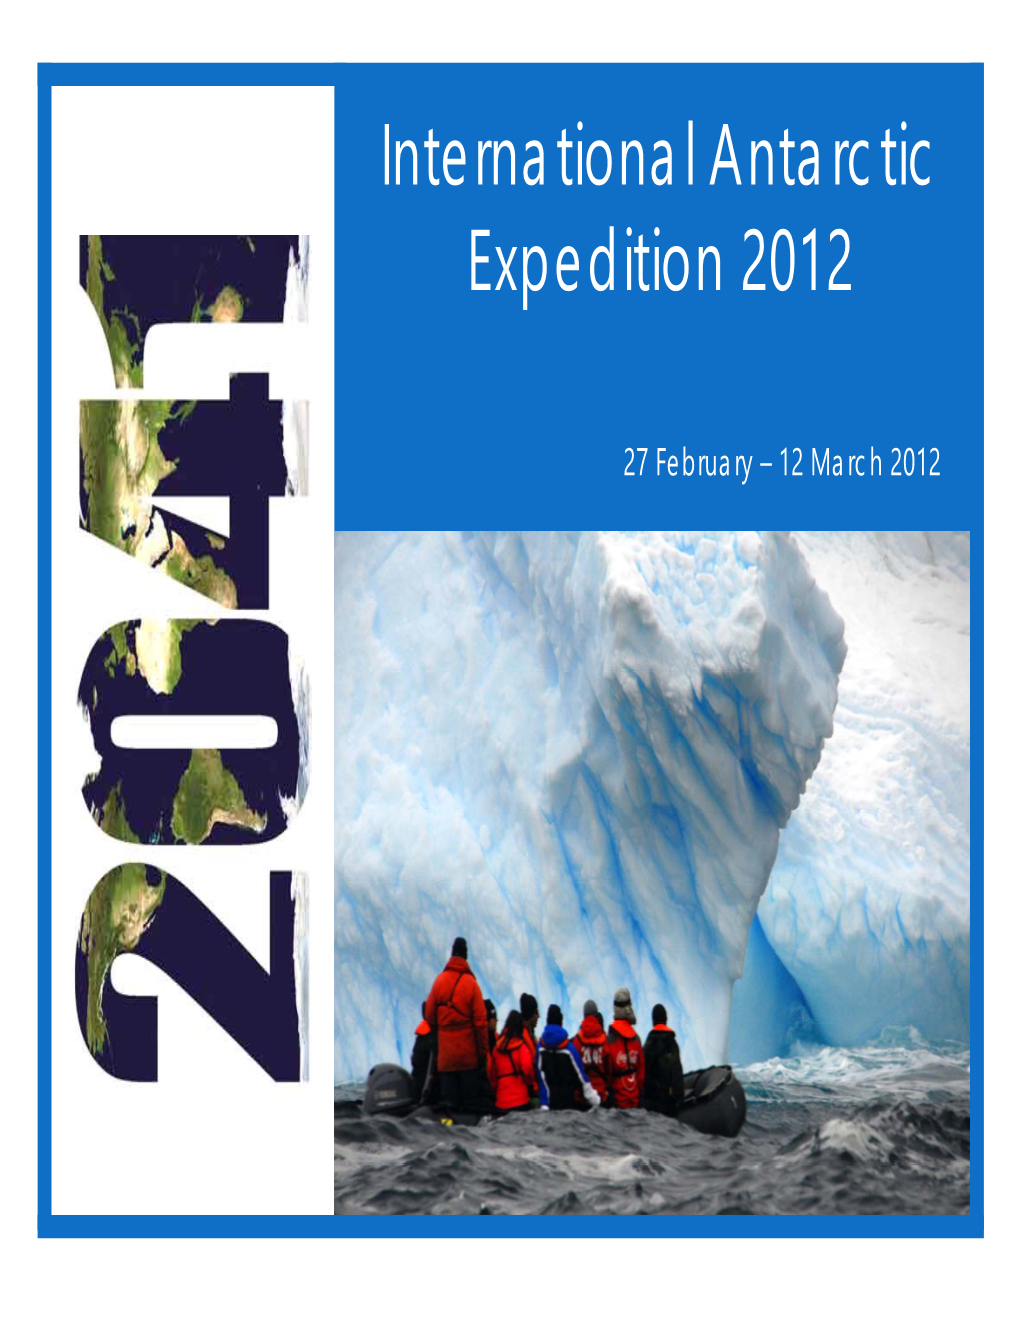 International Antarctic Expedition 2012 (IAE 2012)